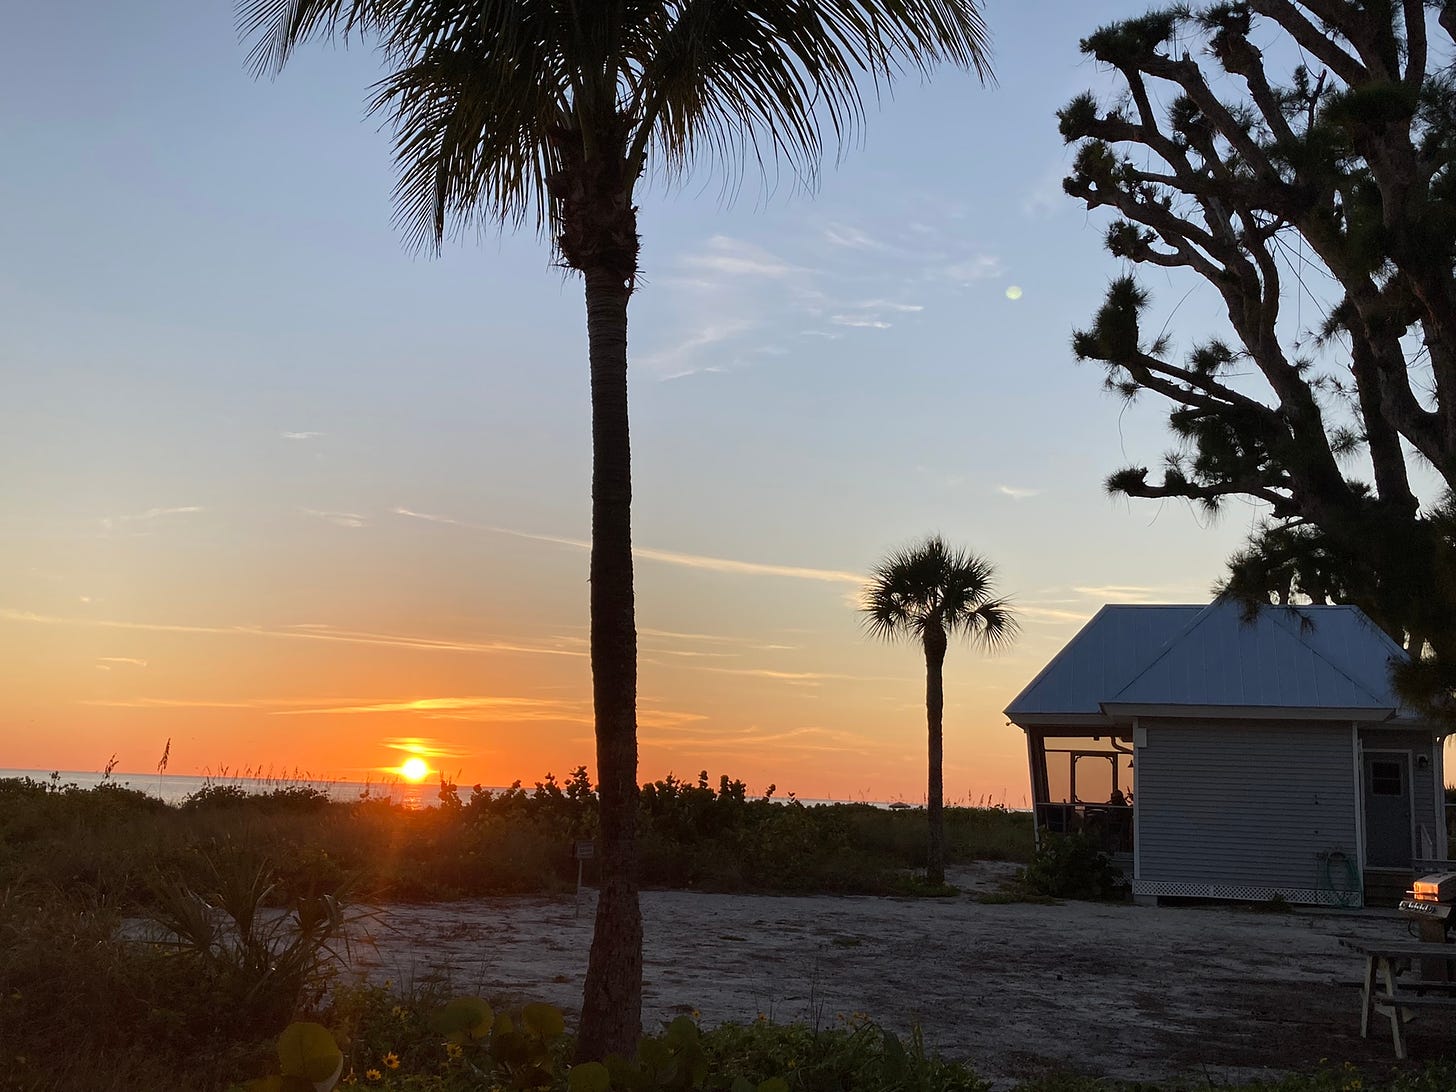 Sunset, palm tree, cabin on the beach